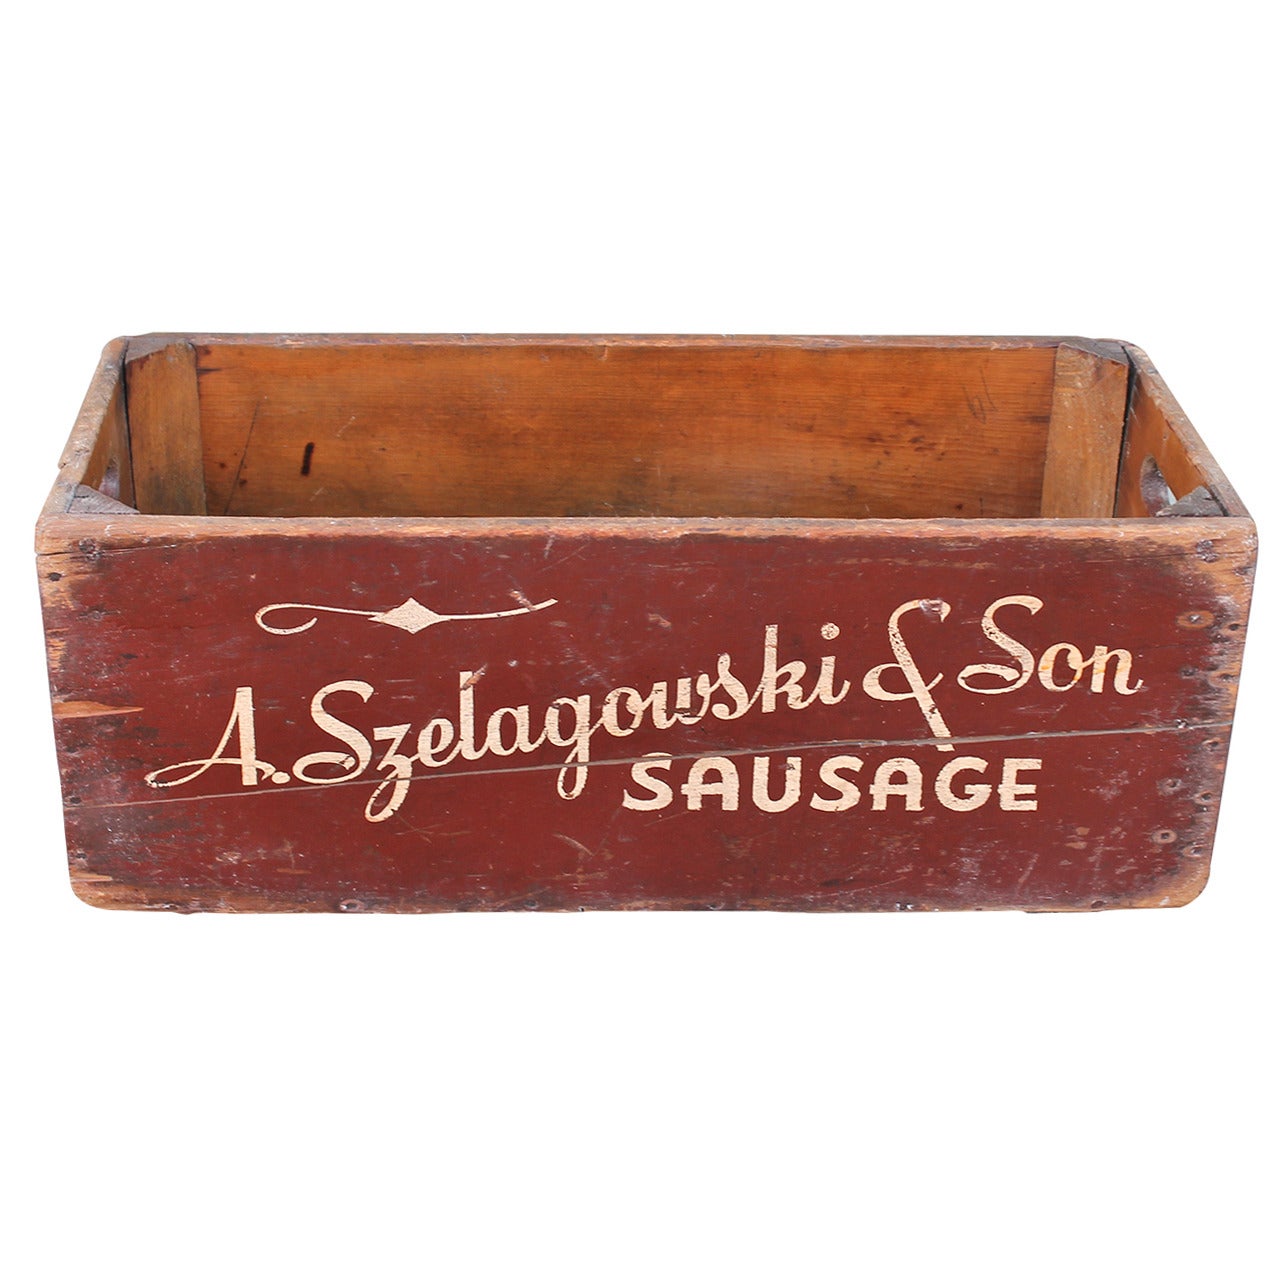 "A.Szelagowski & Son Sausage, " Advertising Box